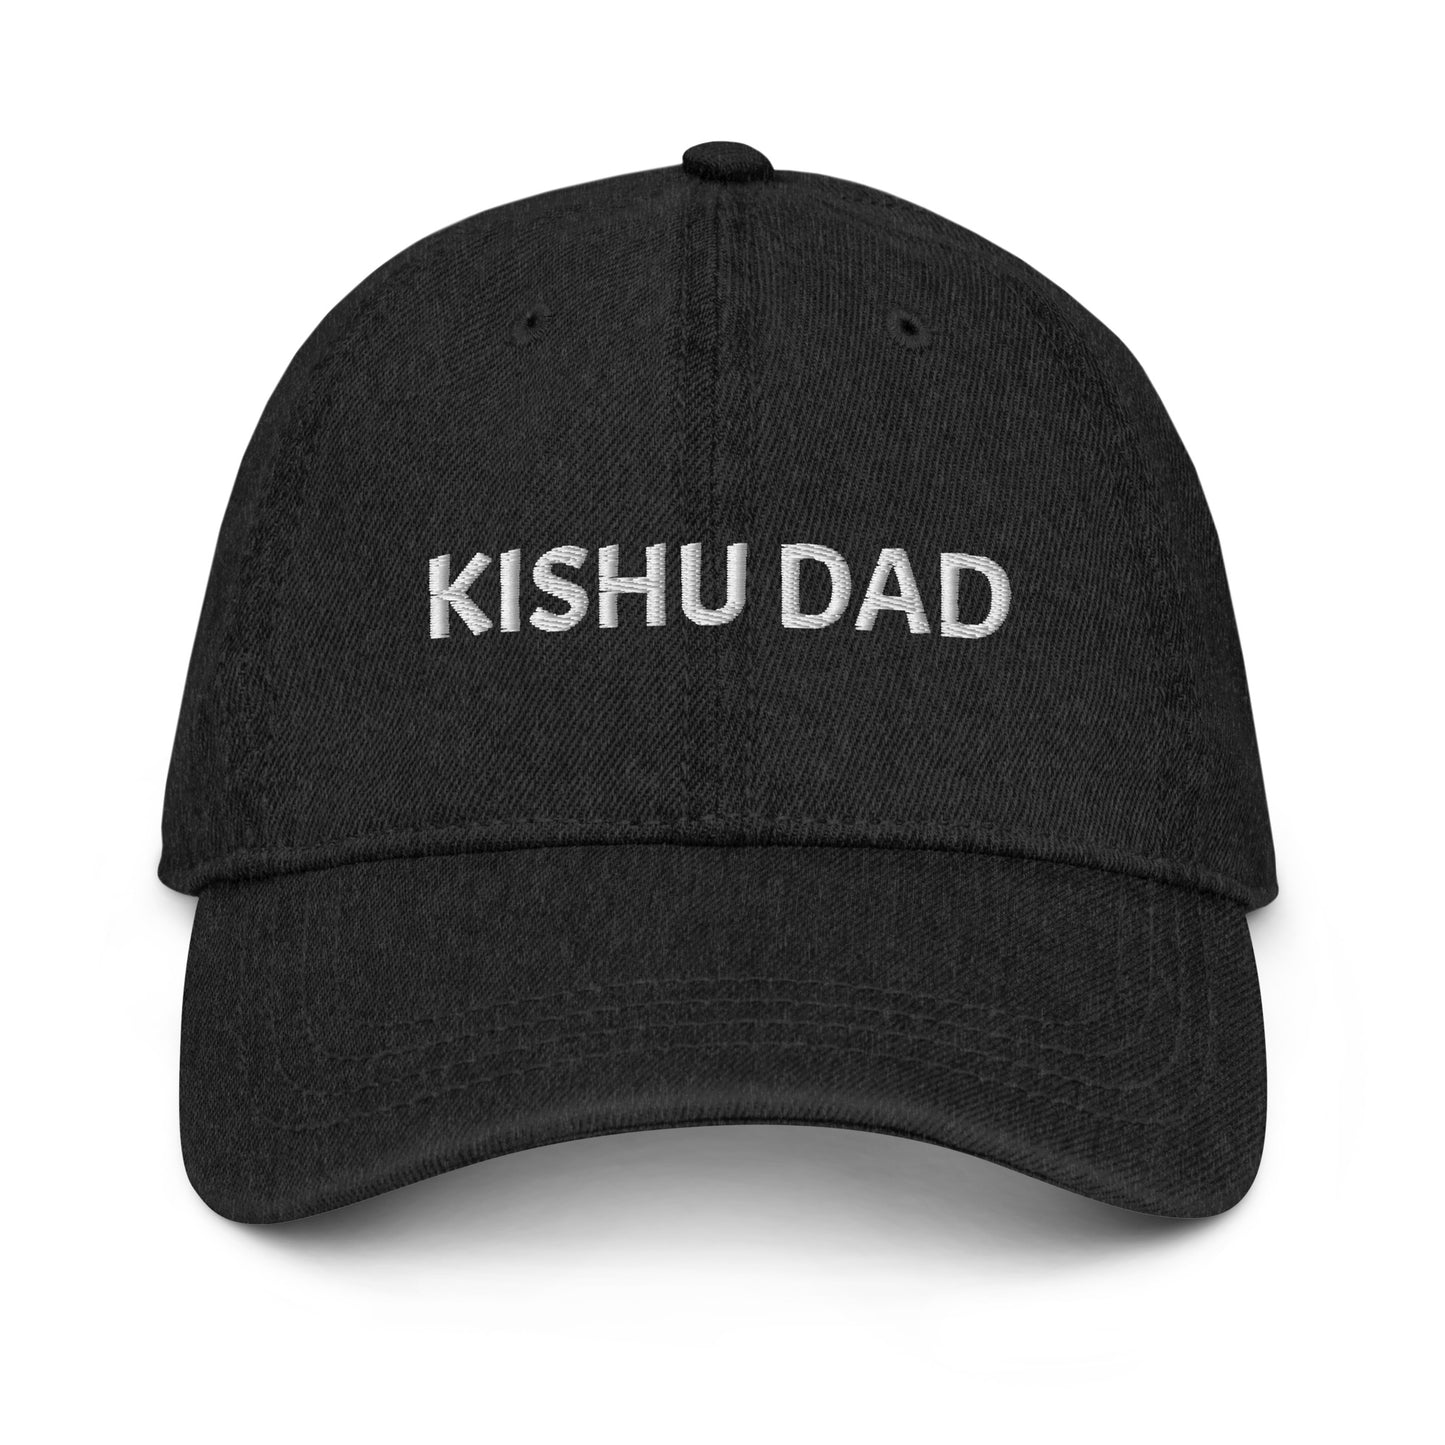 kishu dad black hat